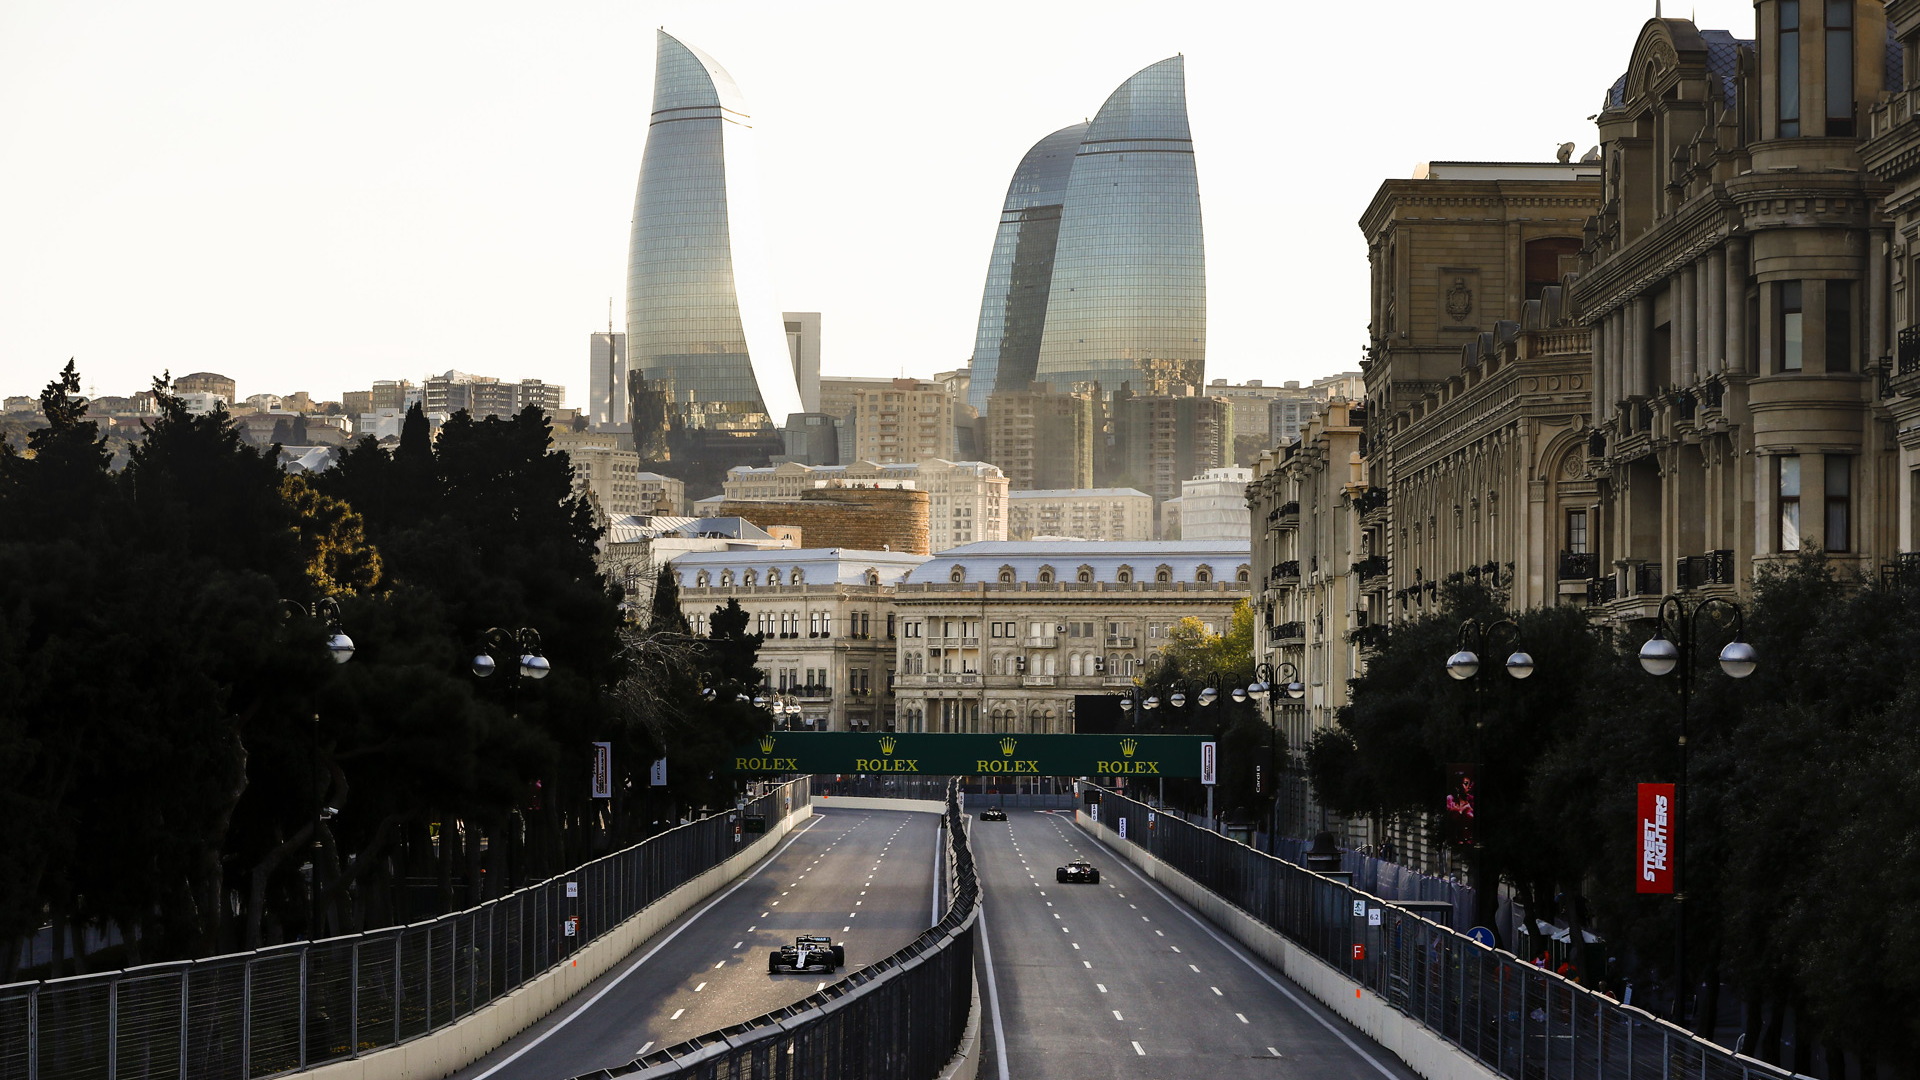 Baku City Circuit, home of the Formula 1 Azerbaijan Grand Prix